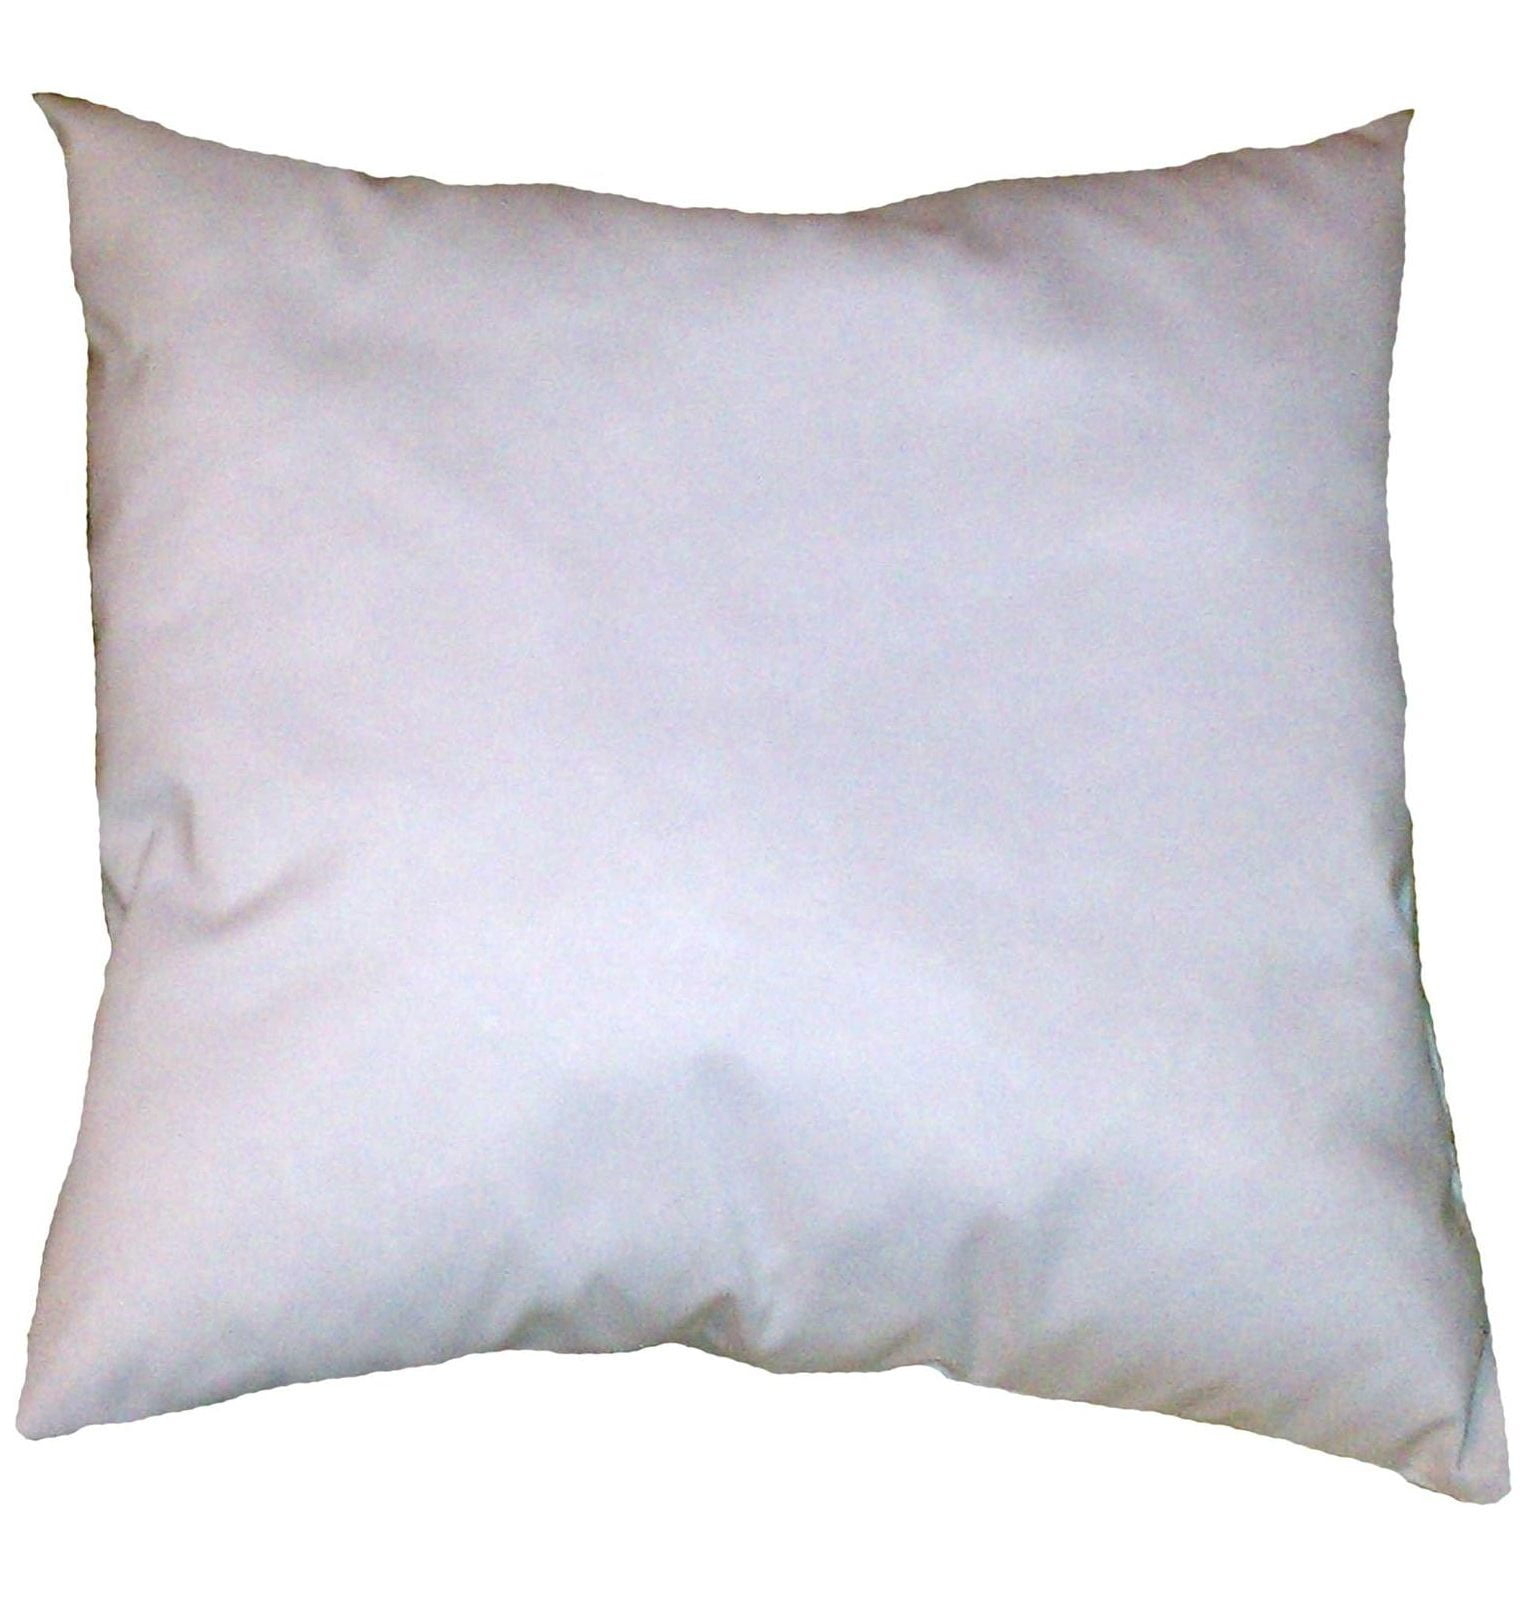 1 Bag of Pillow Filling Stuffing Pillow Filling Pillow Filler